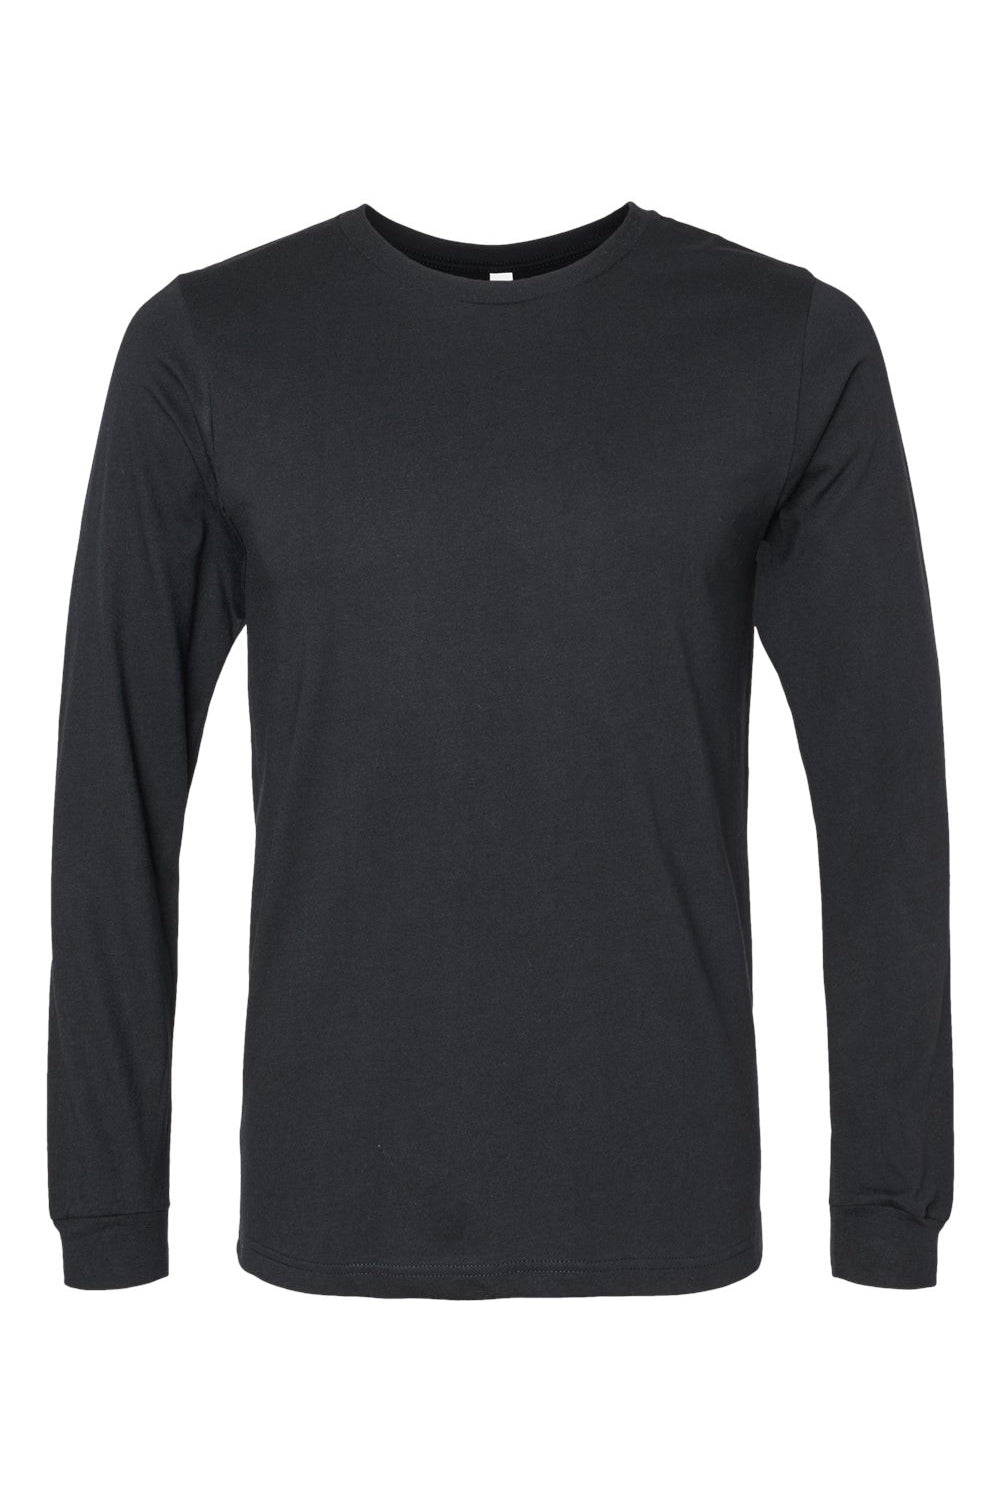 Bella + Canvas BC3501CVC Mens CVC Long Sleeve Crewneck T-Shirt Solid Black Flat Front